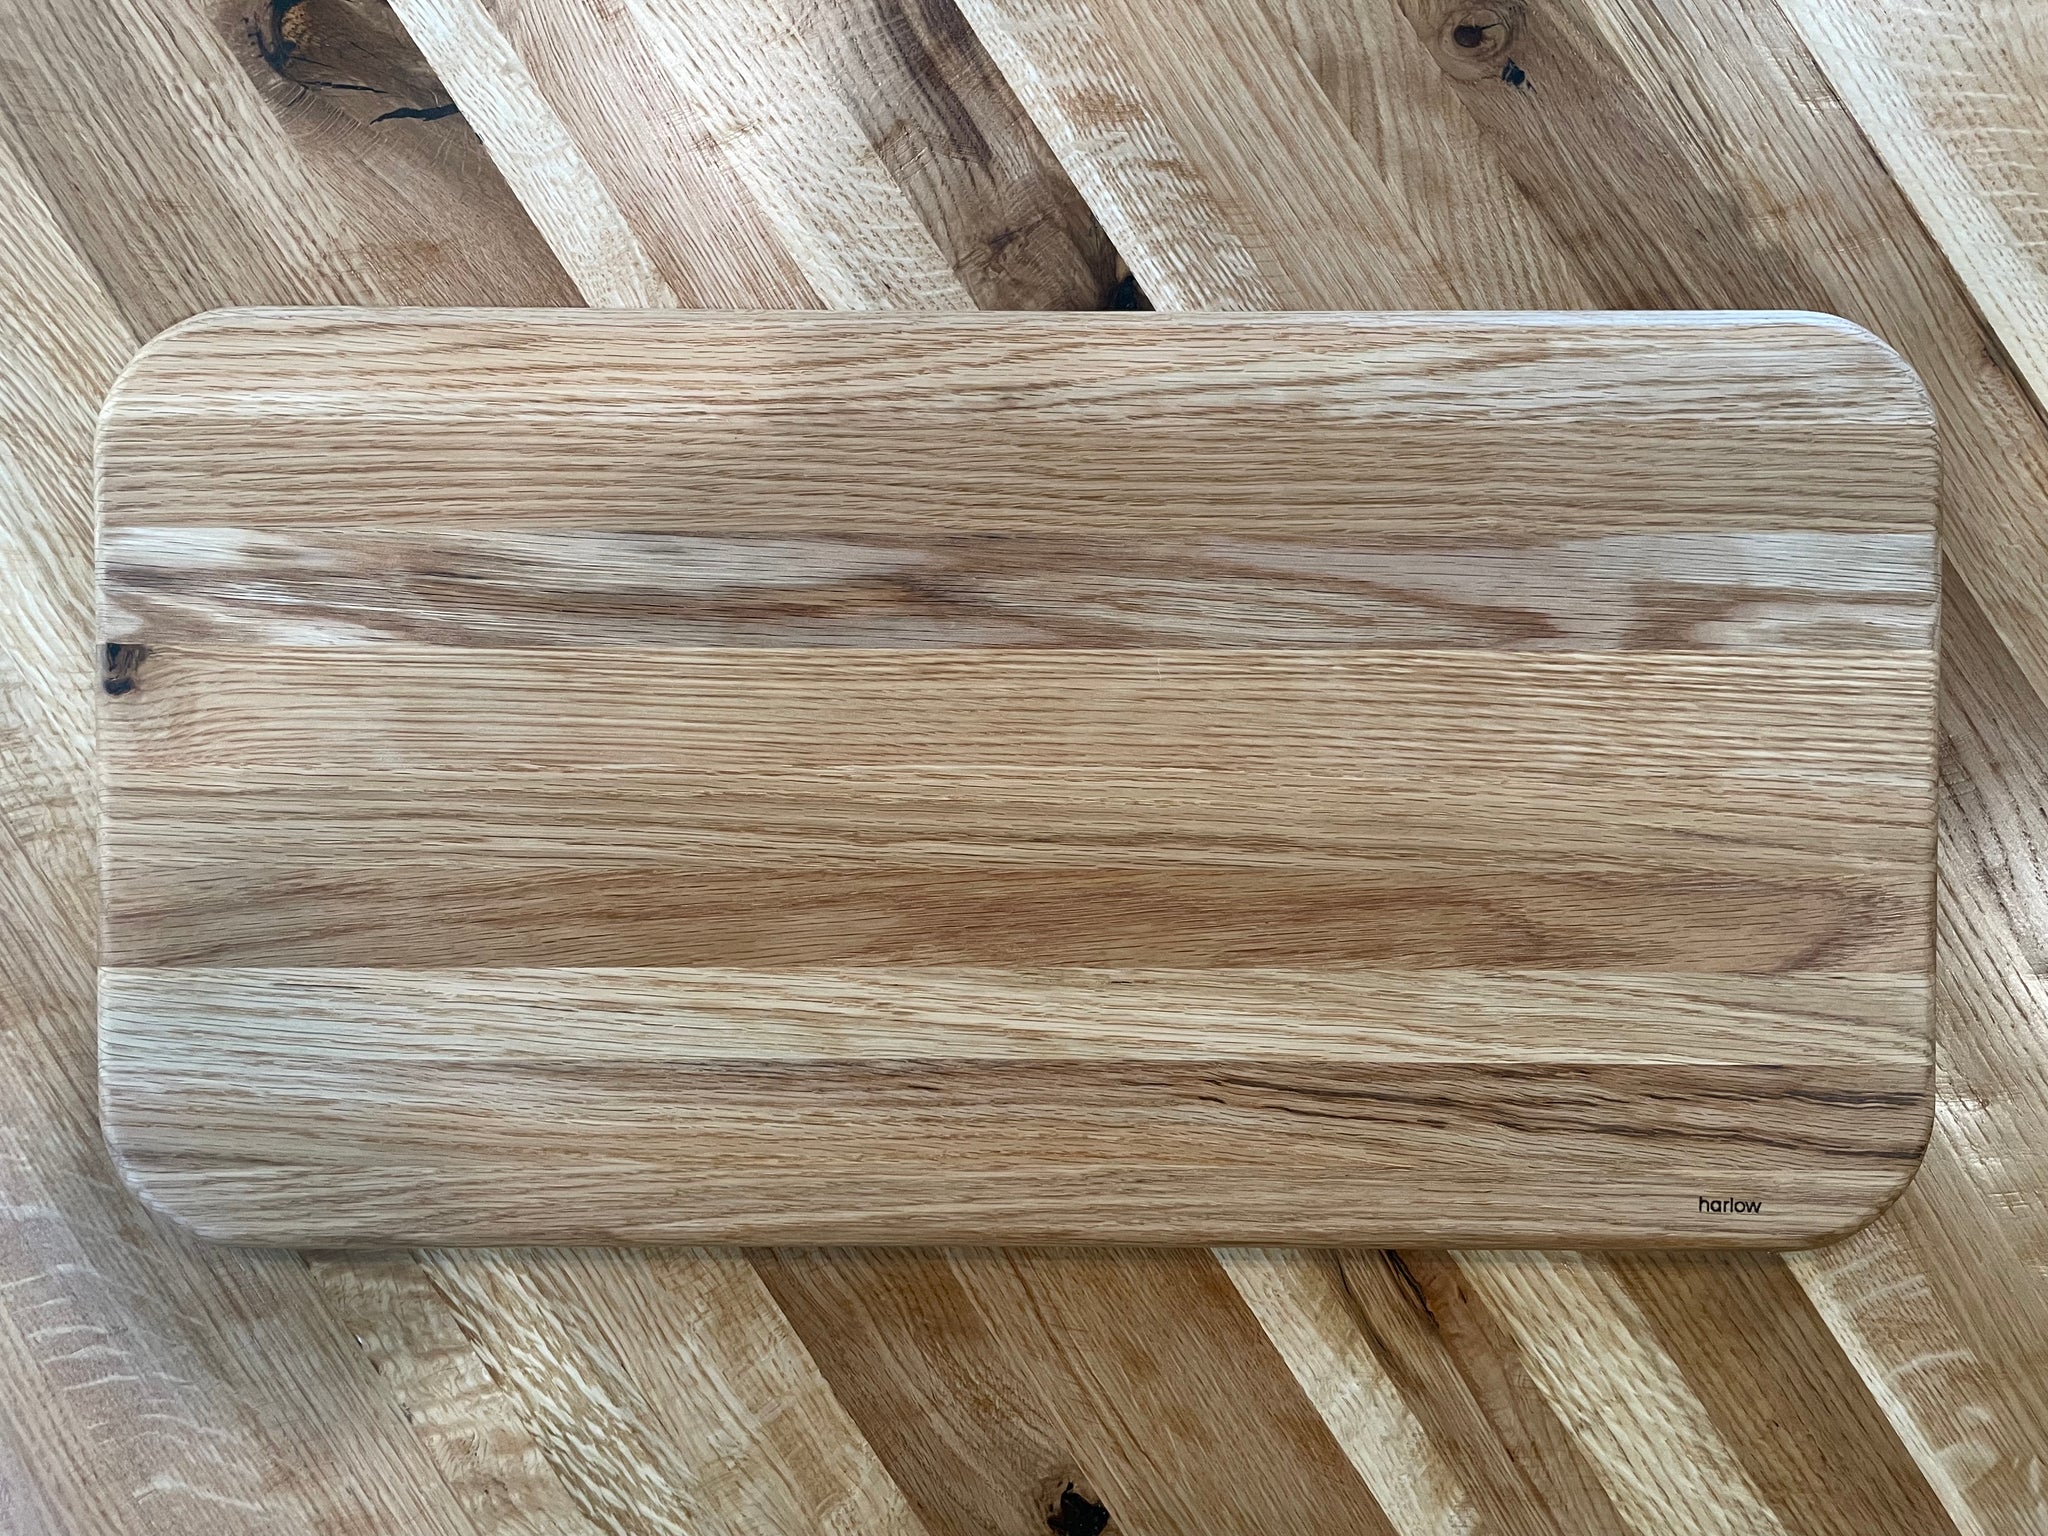 Large white oak cutting board